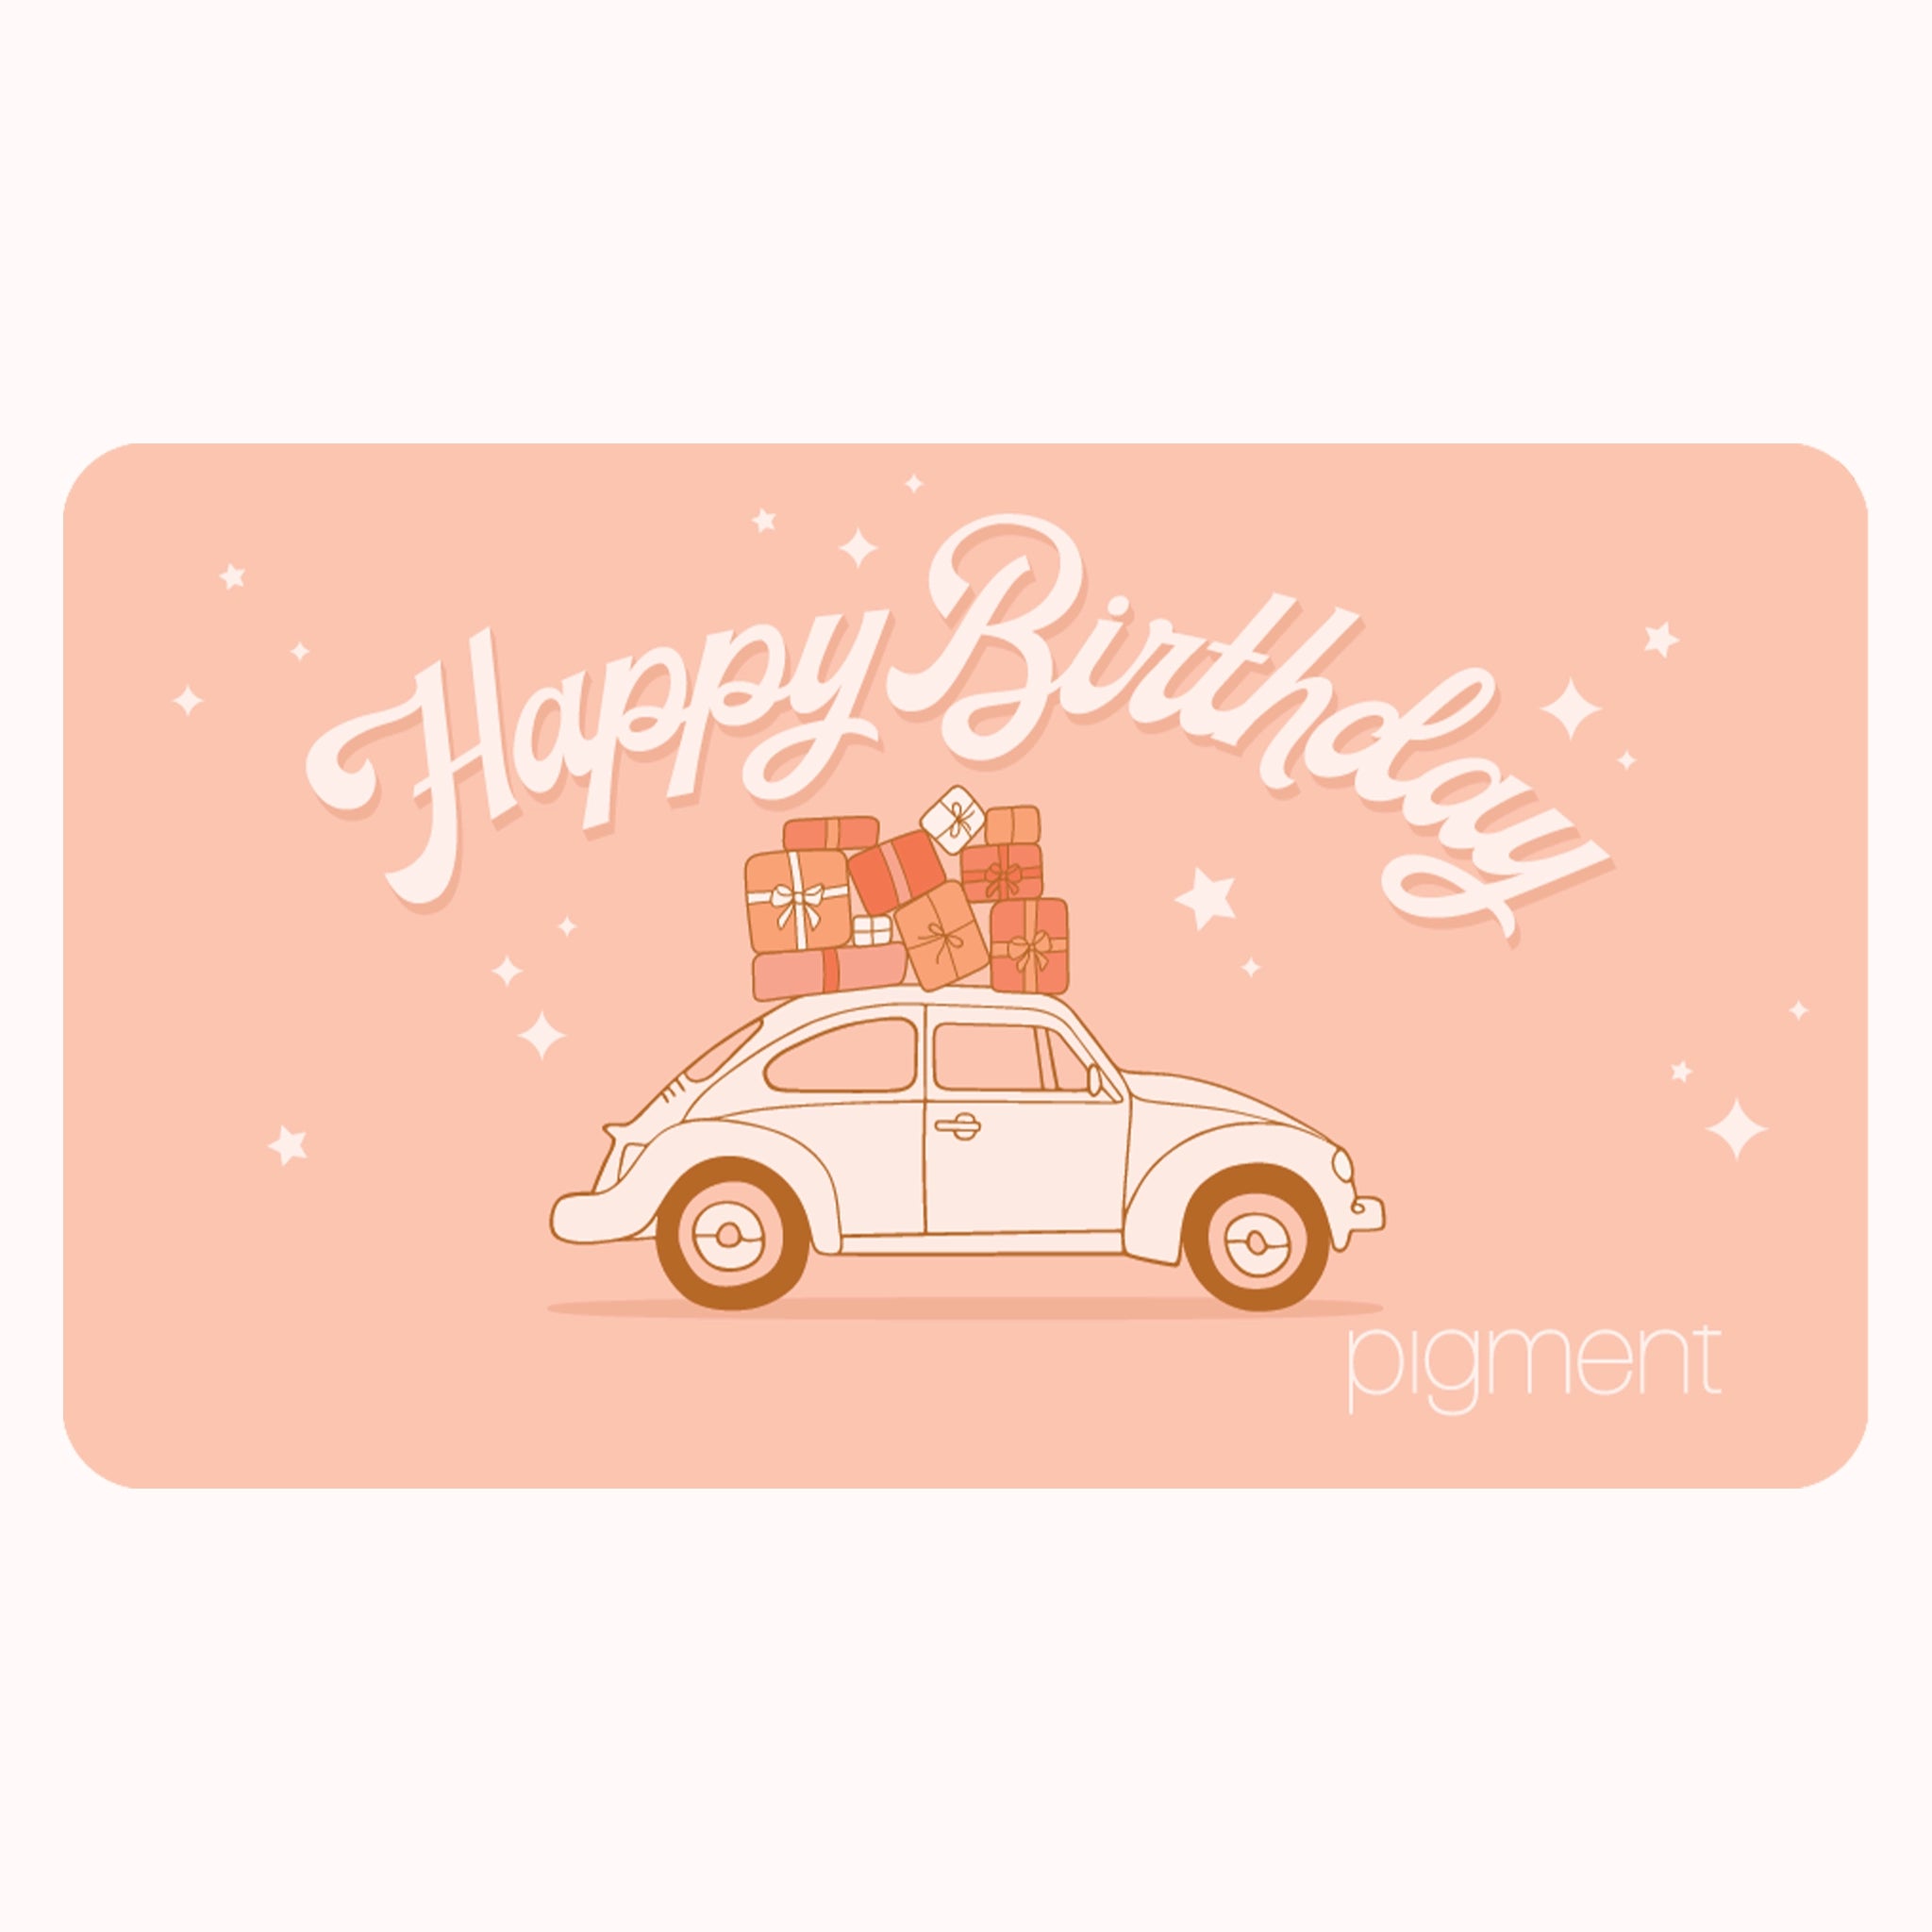 Happy Birthday! Gift Card!